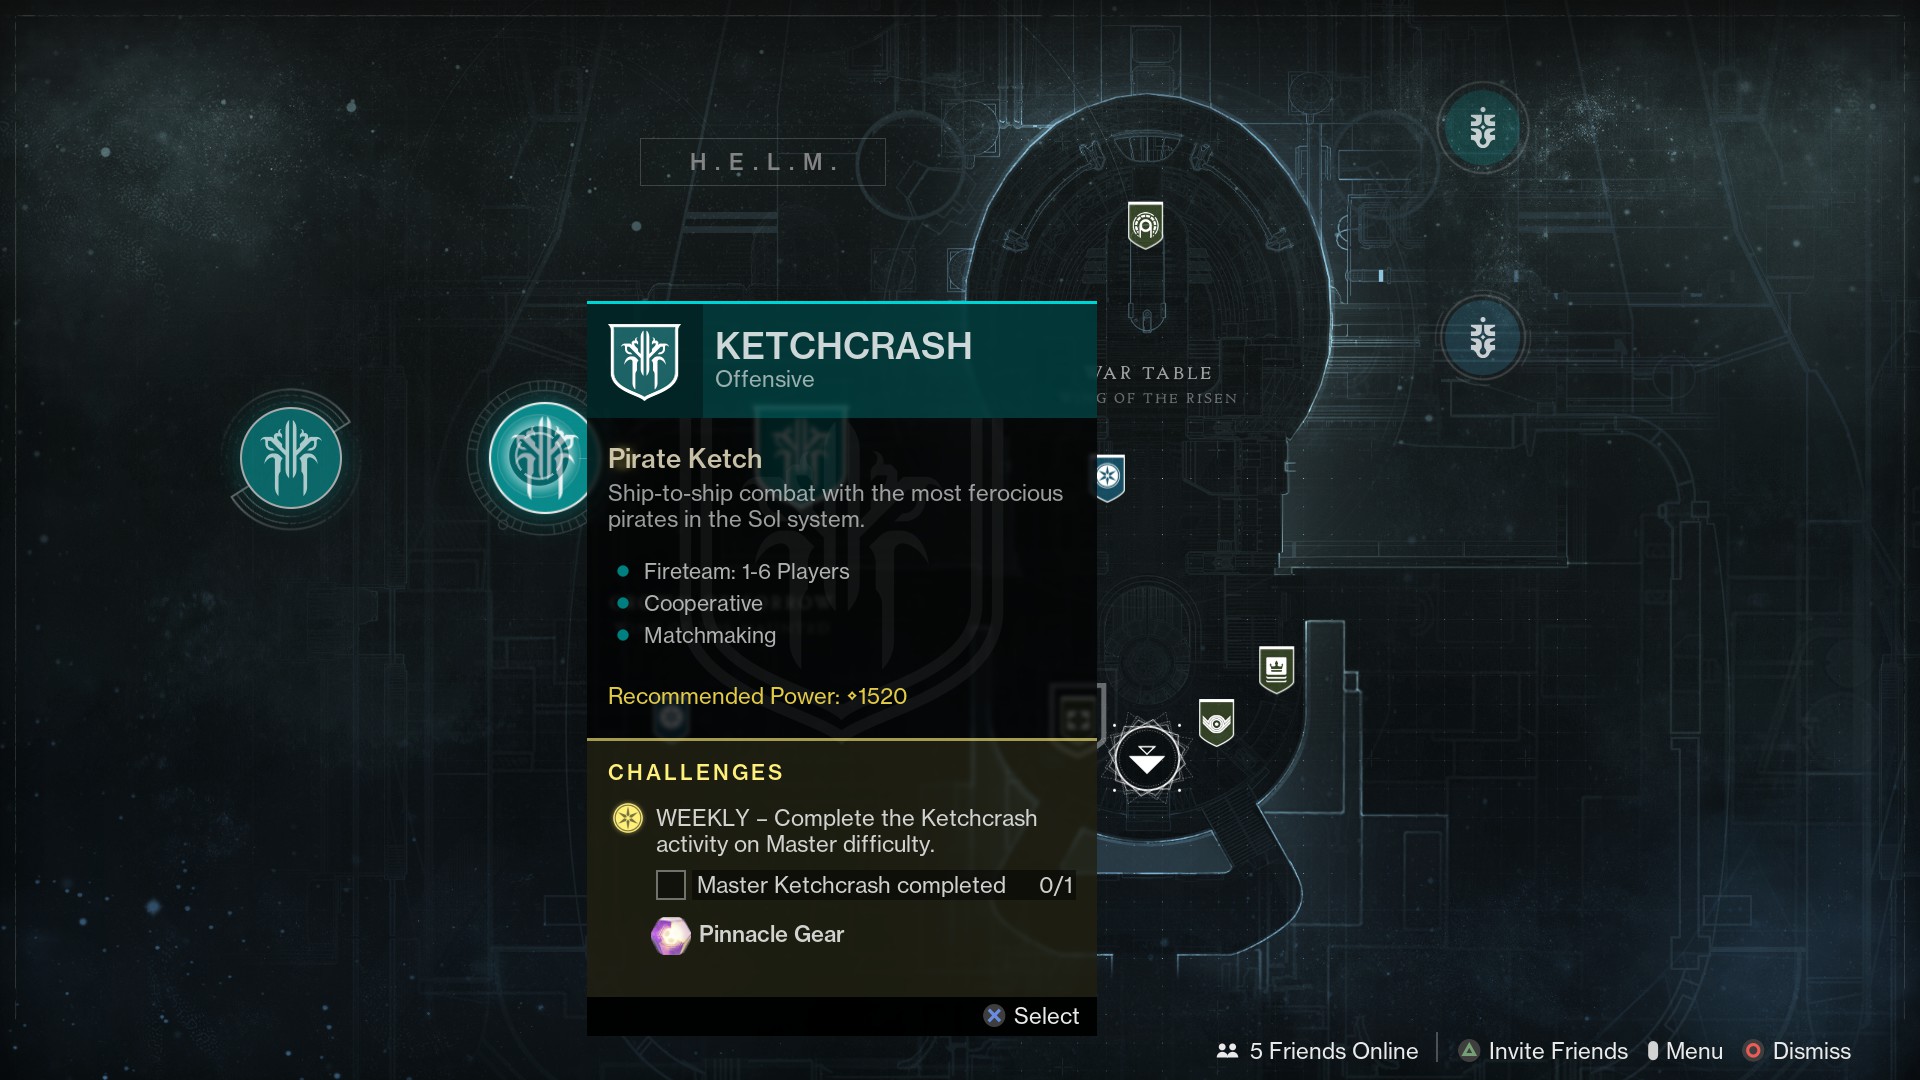 Destiny 2 Ketchcrash activity for map fragments